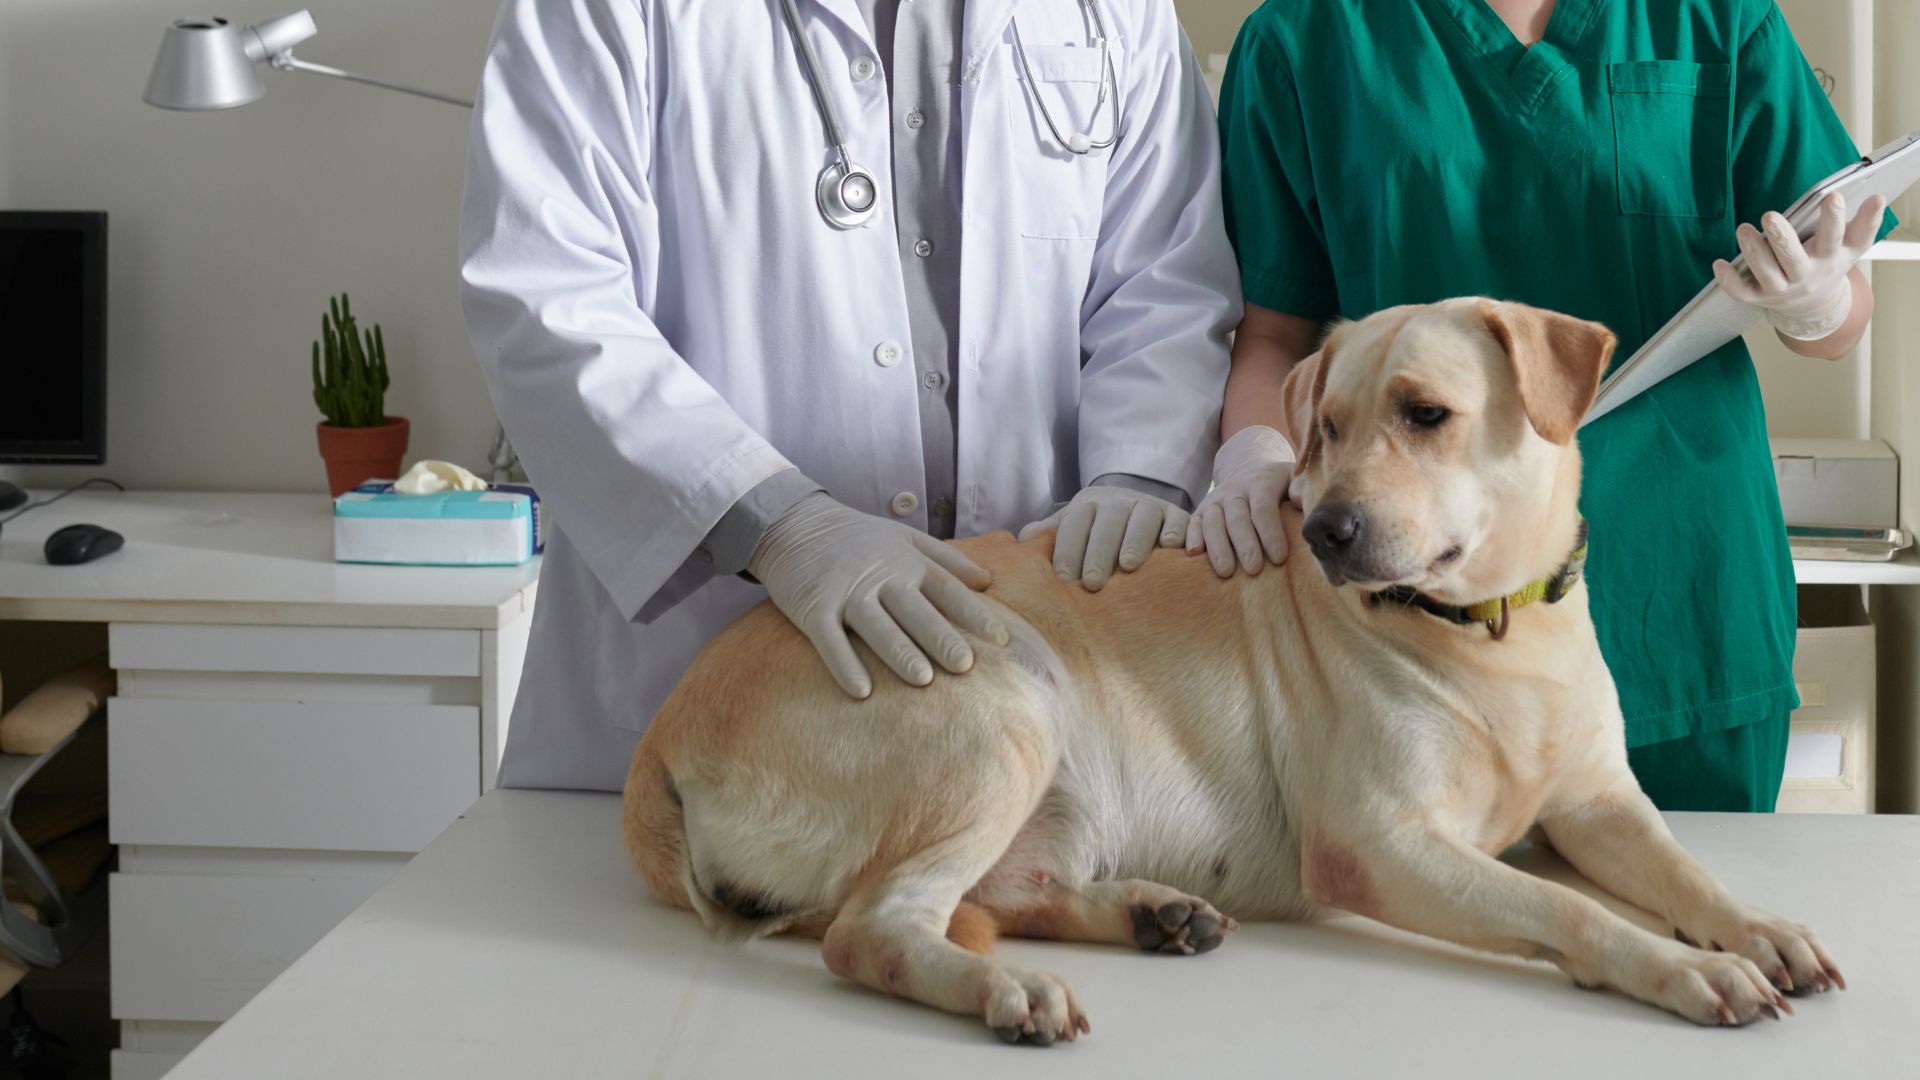 veterinarian checks the dog